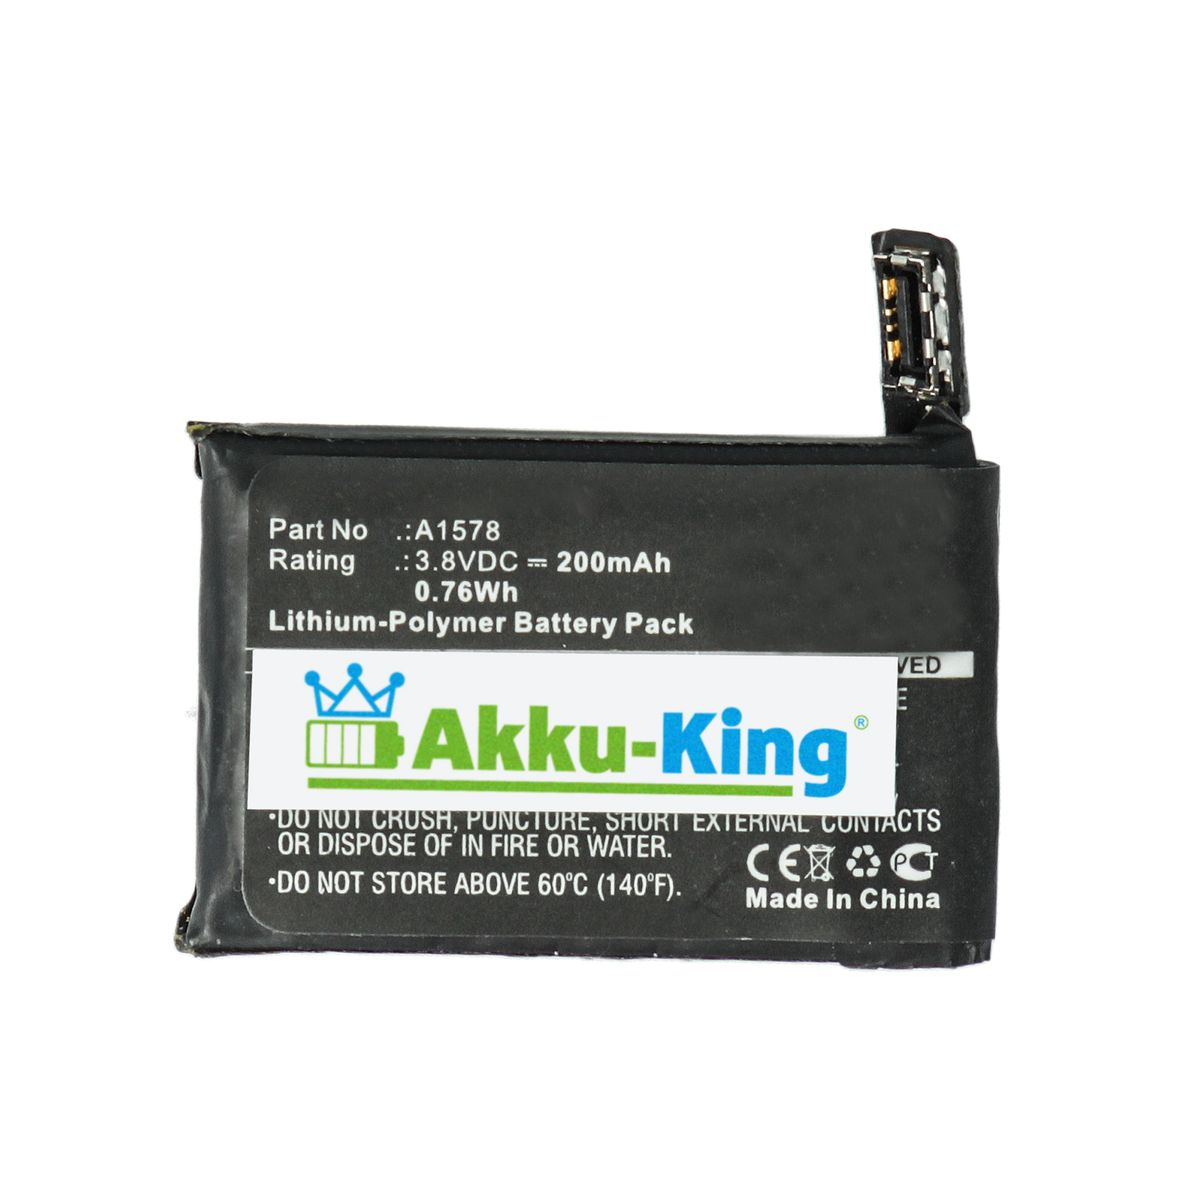 Apple Akku Li-Polymer 3.8 A1578 kompatibel mit 200mAh Volt, Smartwatch-Akku, AKKU-KING